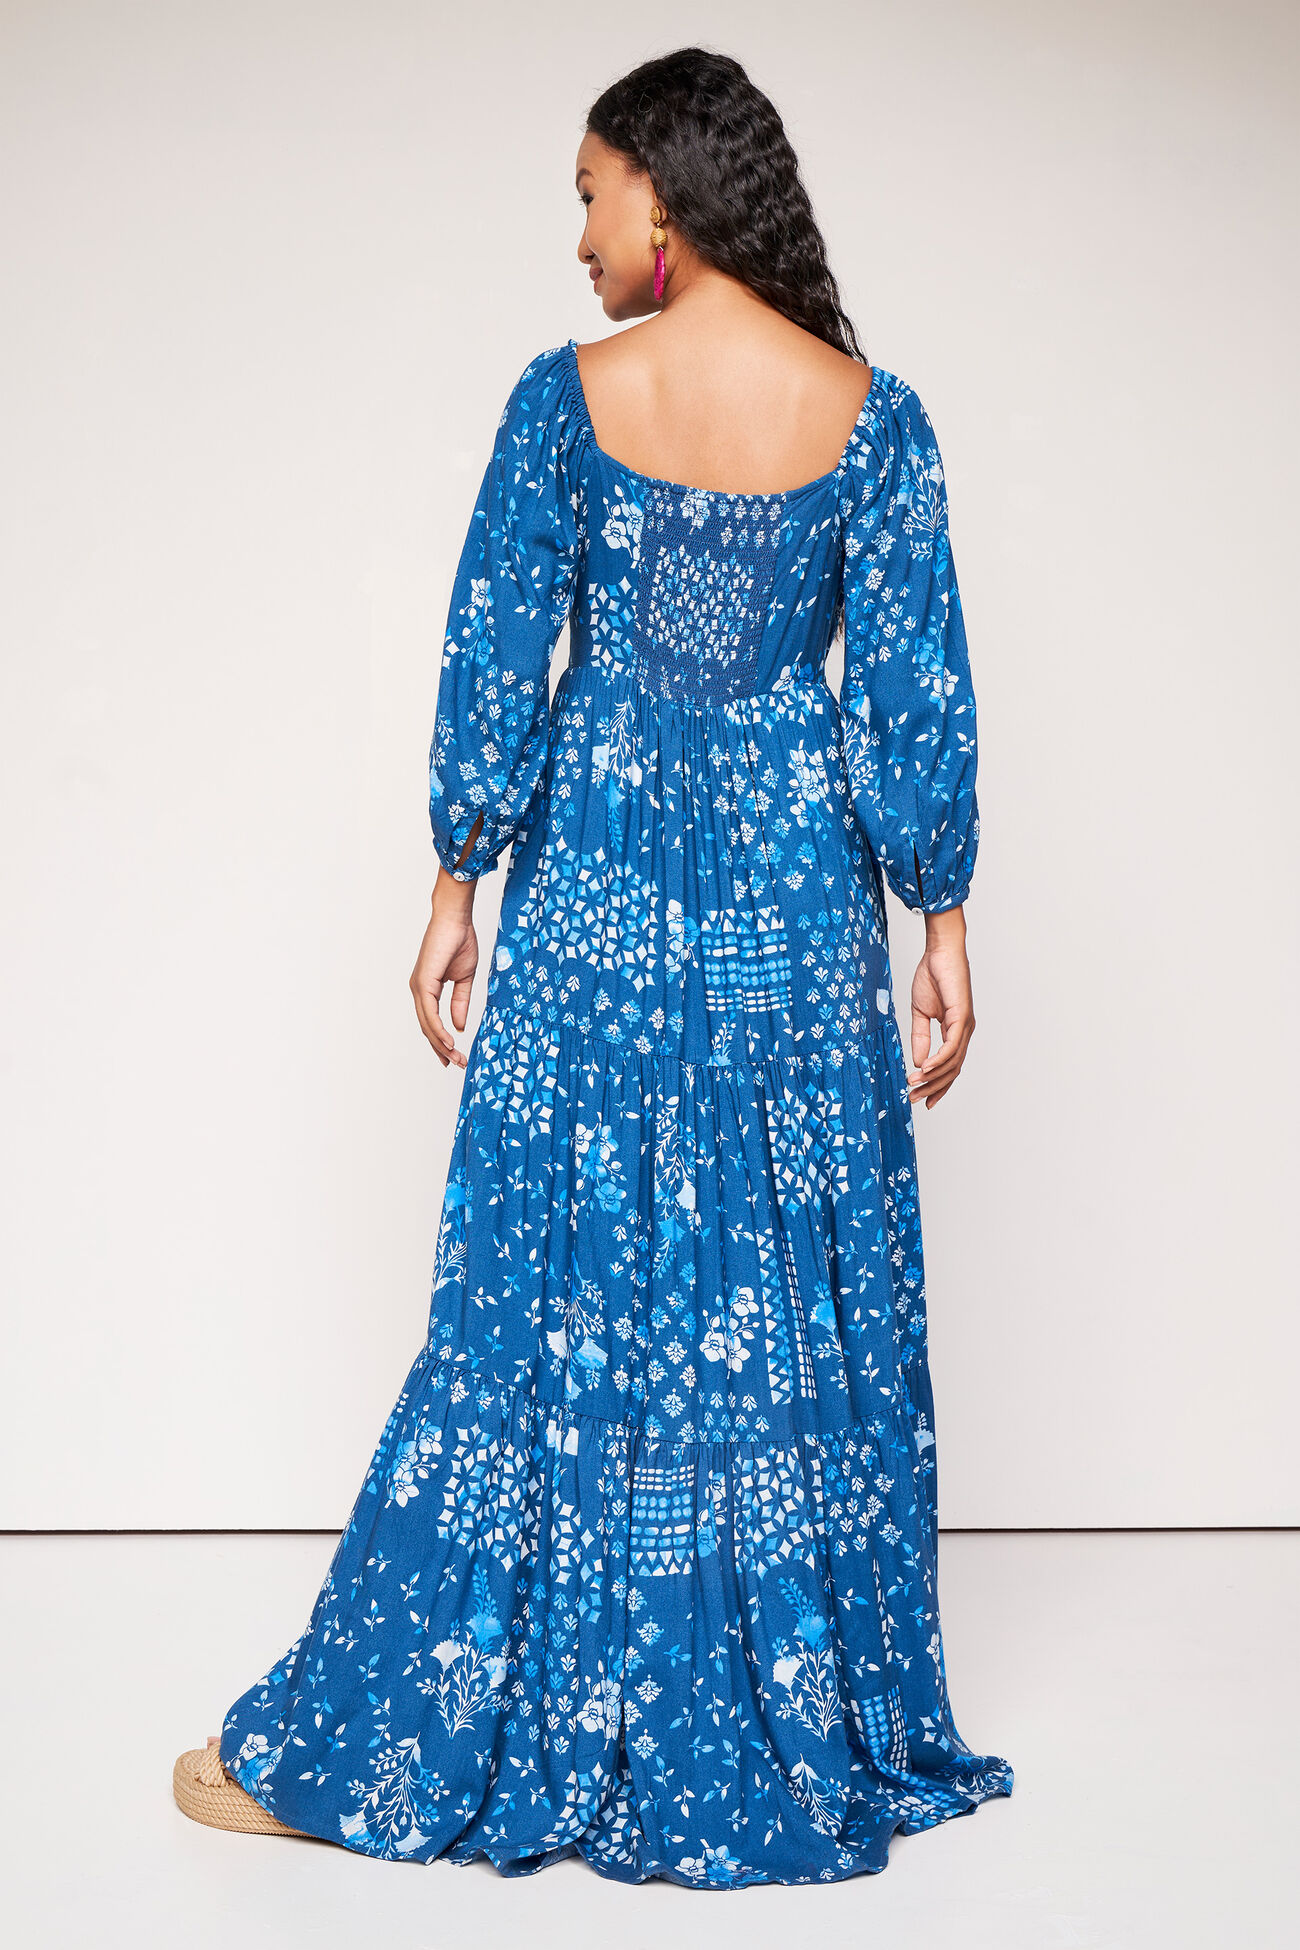 Lucky Brand Women's Indigo Floral Maxi Dress Blue 7W42823 XSm Extra Small